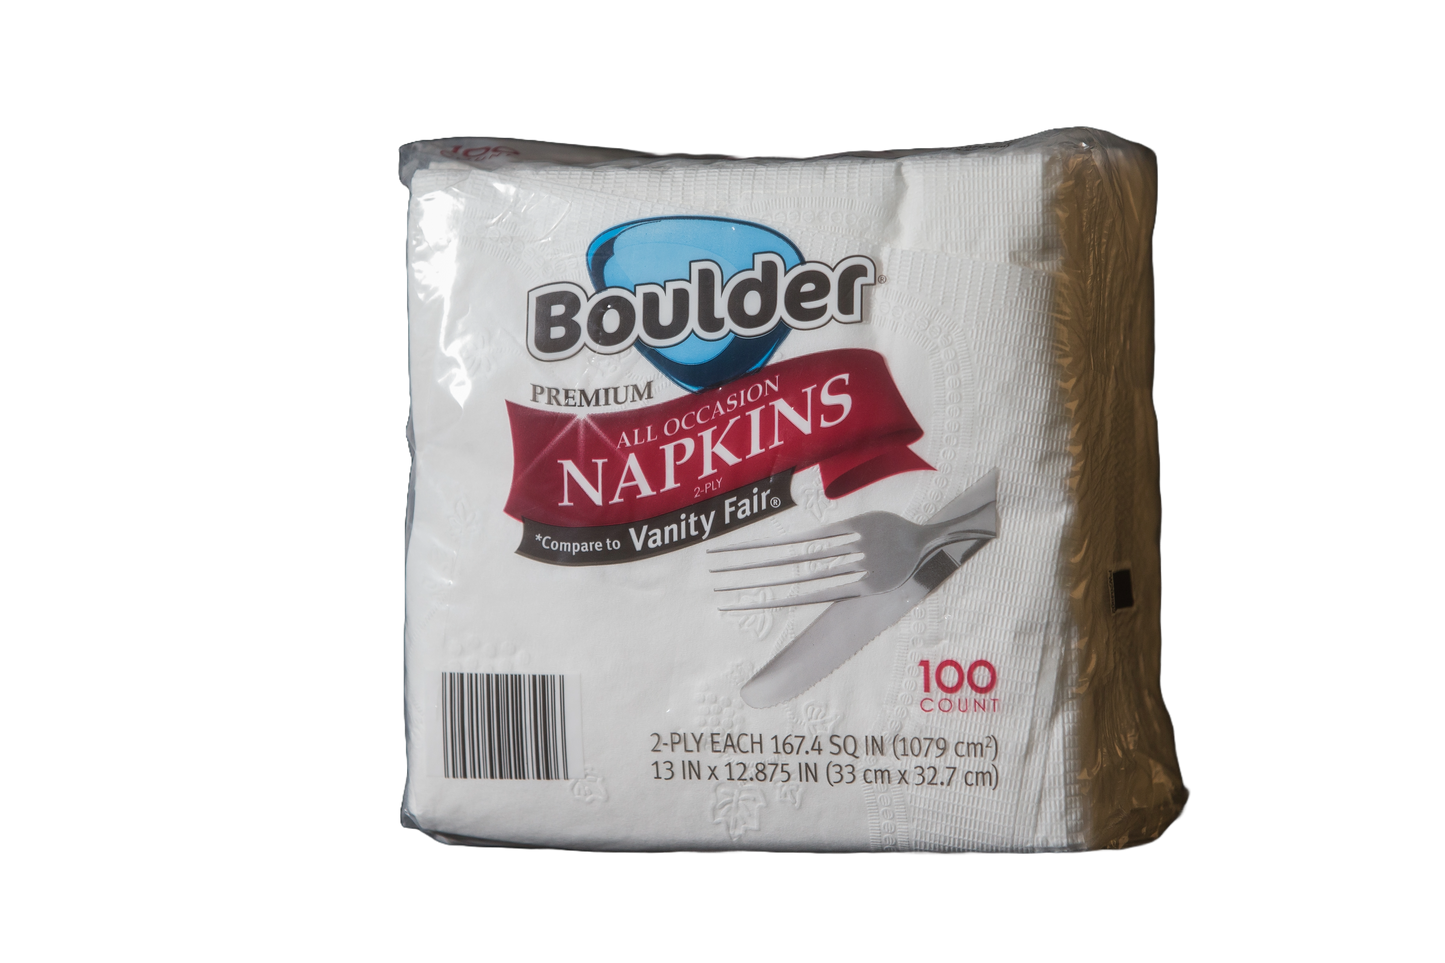 Boulder Premium All Occasion Napkins, 100 Count